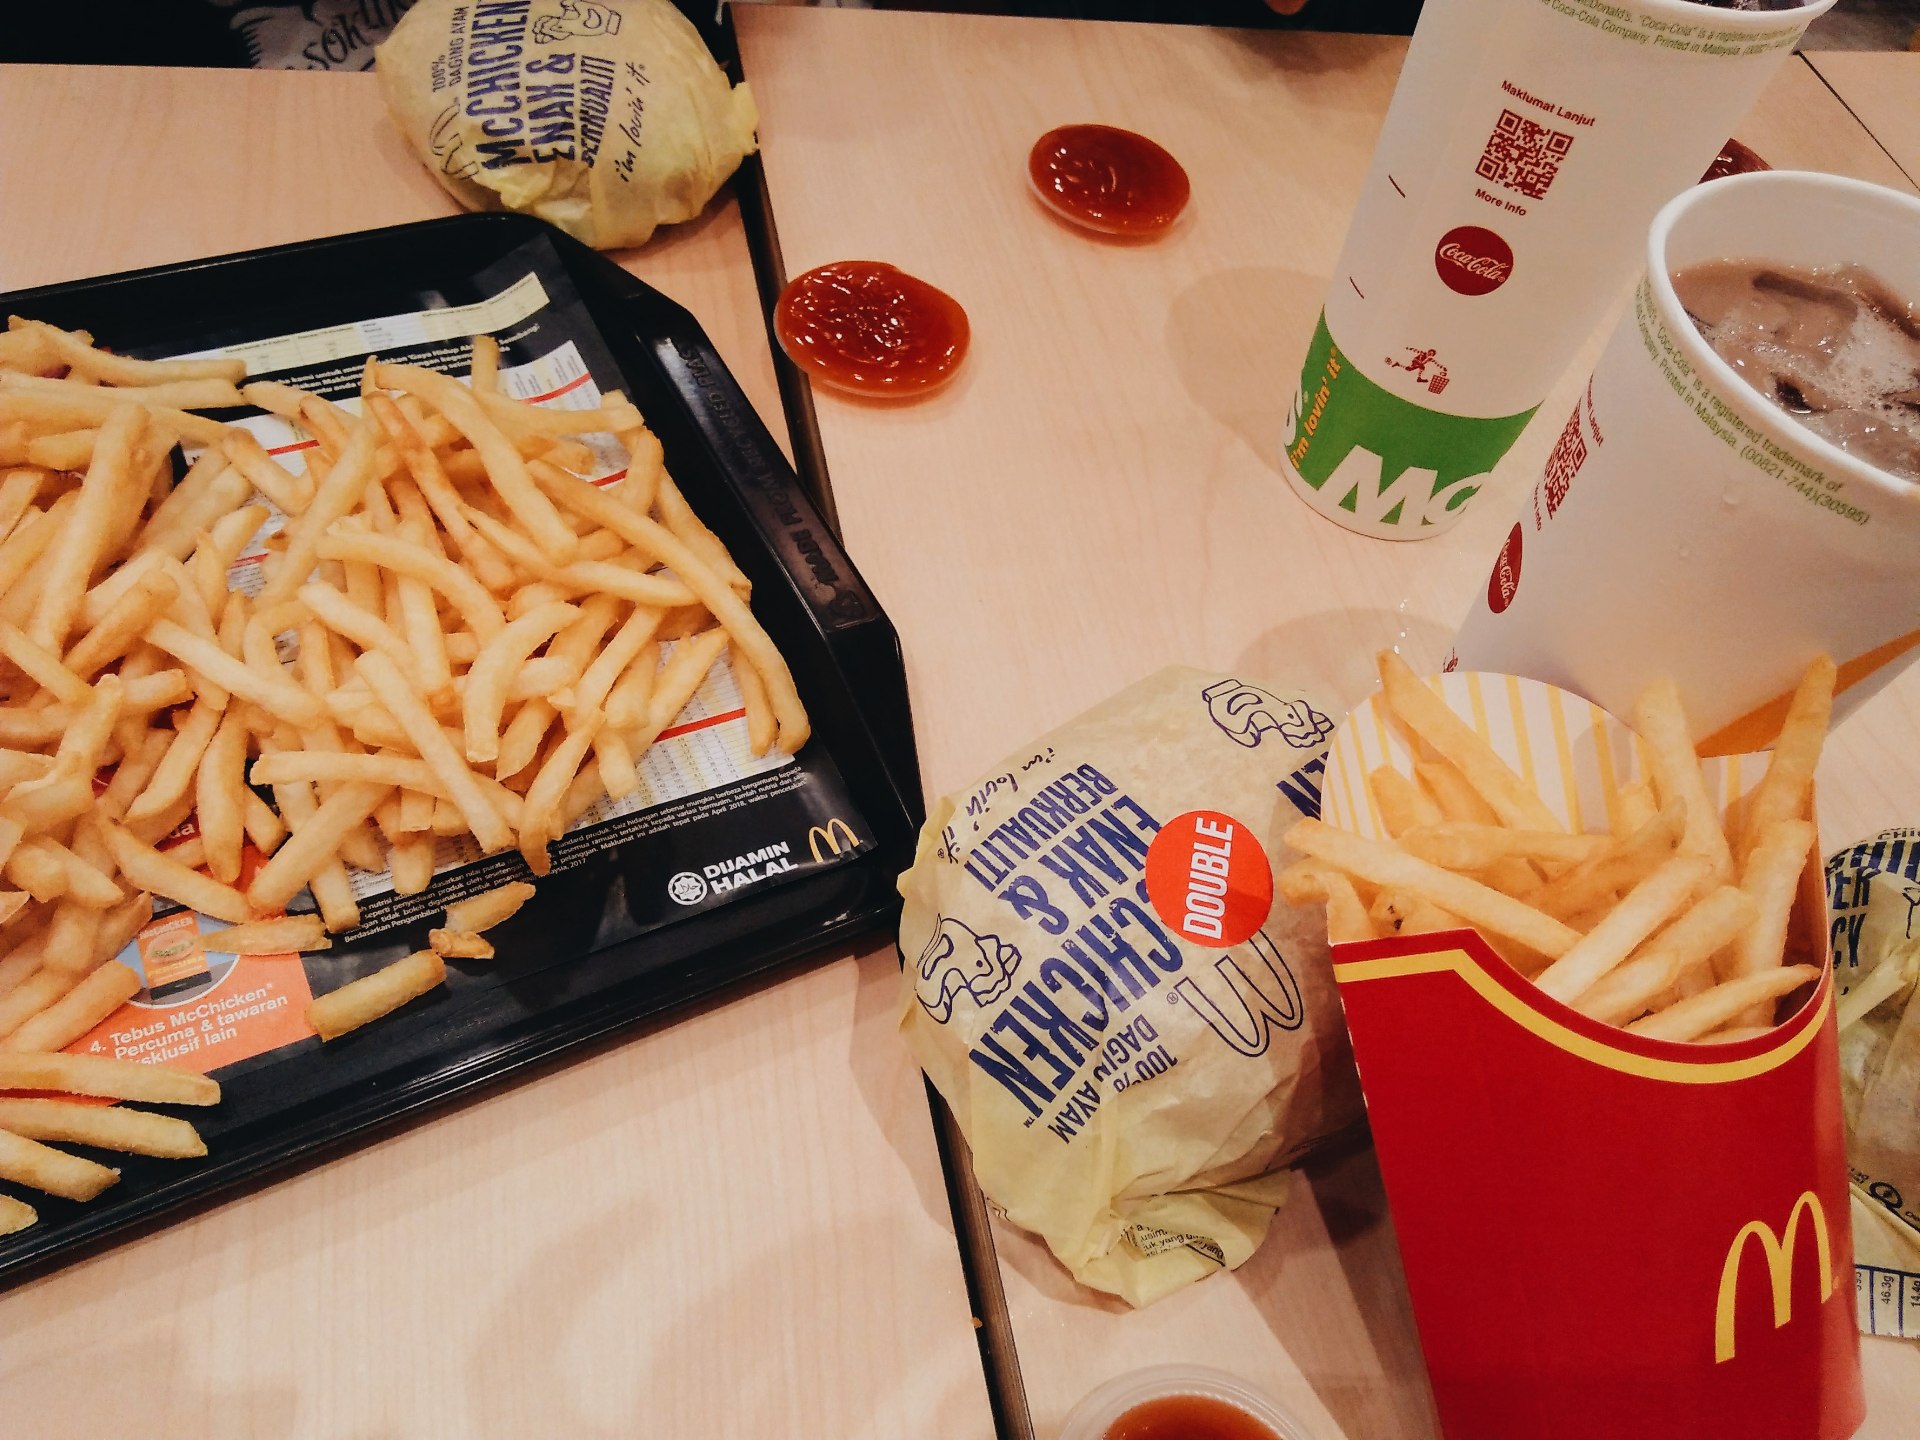 A McDonald’s meal. Image: Sepet
